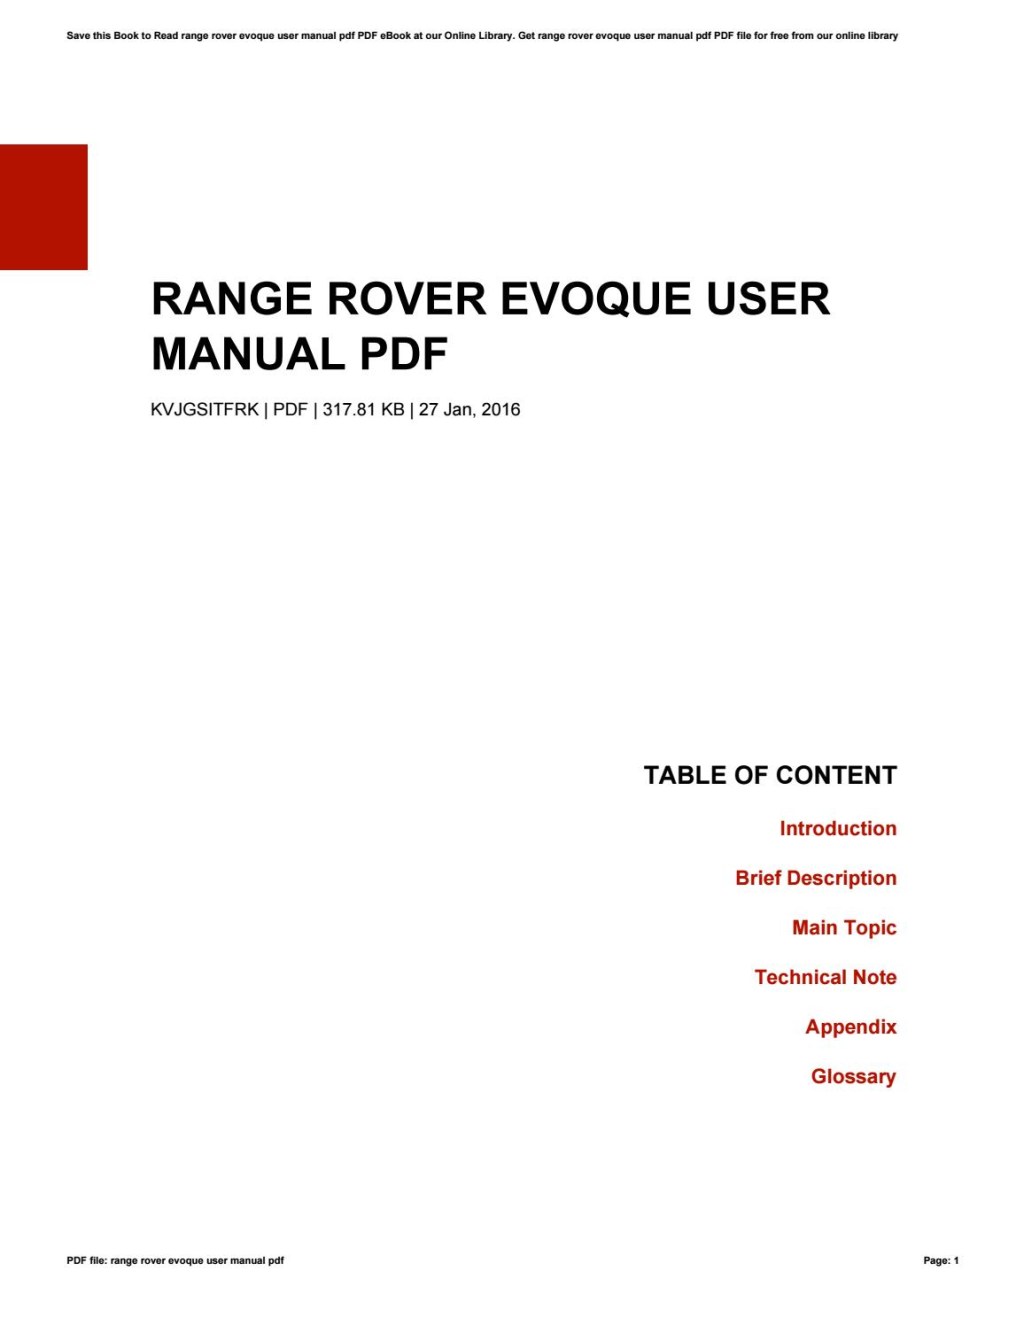 Picture of: Range rover evoque user manual pdf by MichelleBauer – Issuu